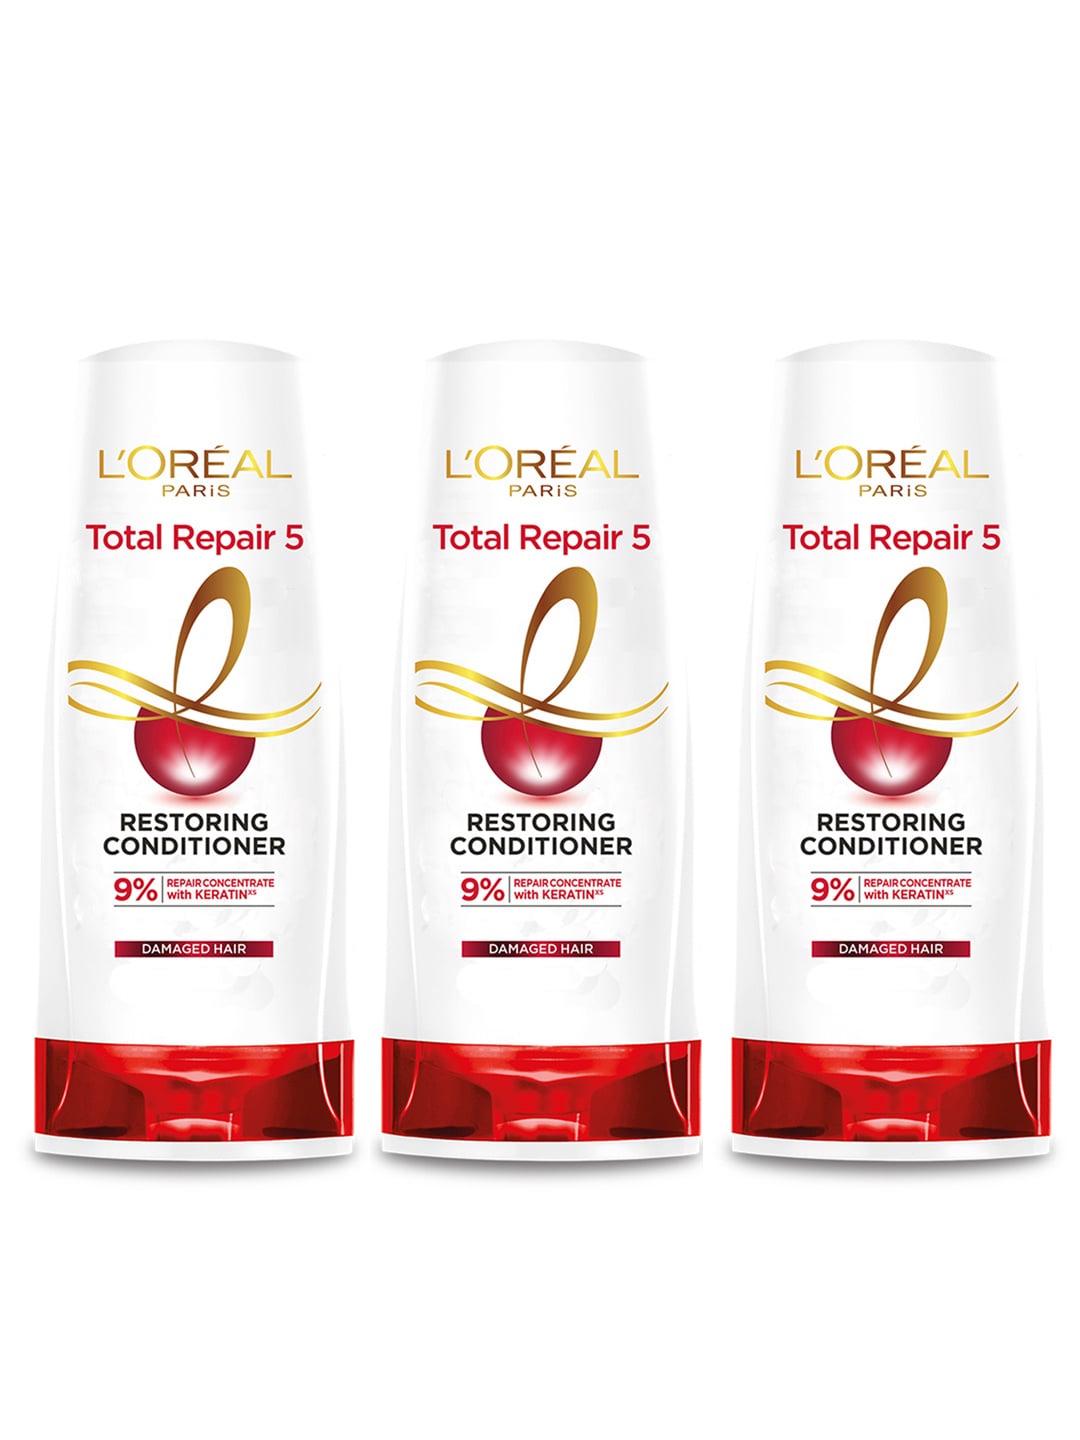 LOreal Paris Set of 3 Total Repair 5 Restoring Hair Conditioners - 175 ml each Price in India